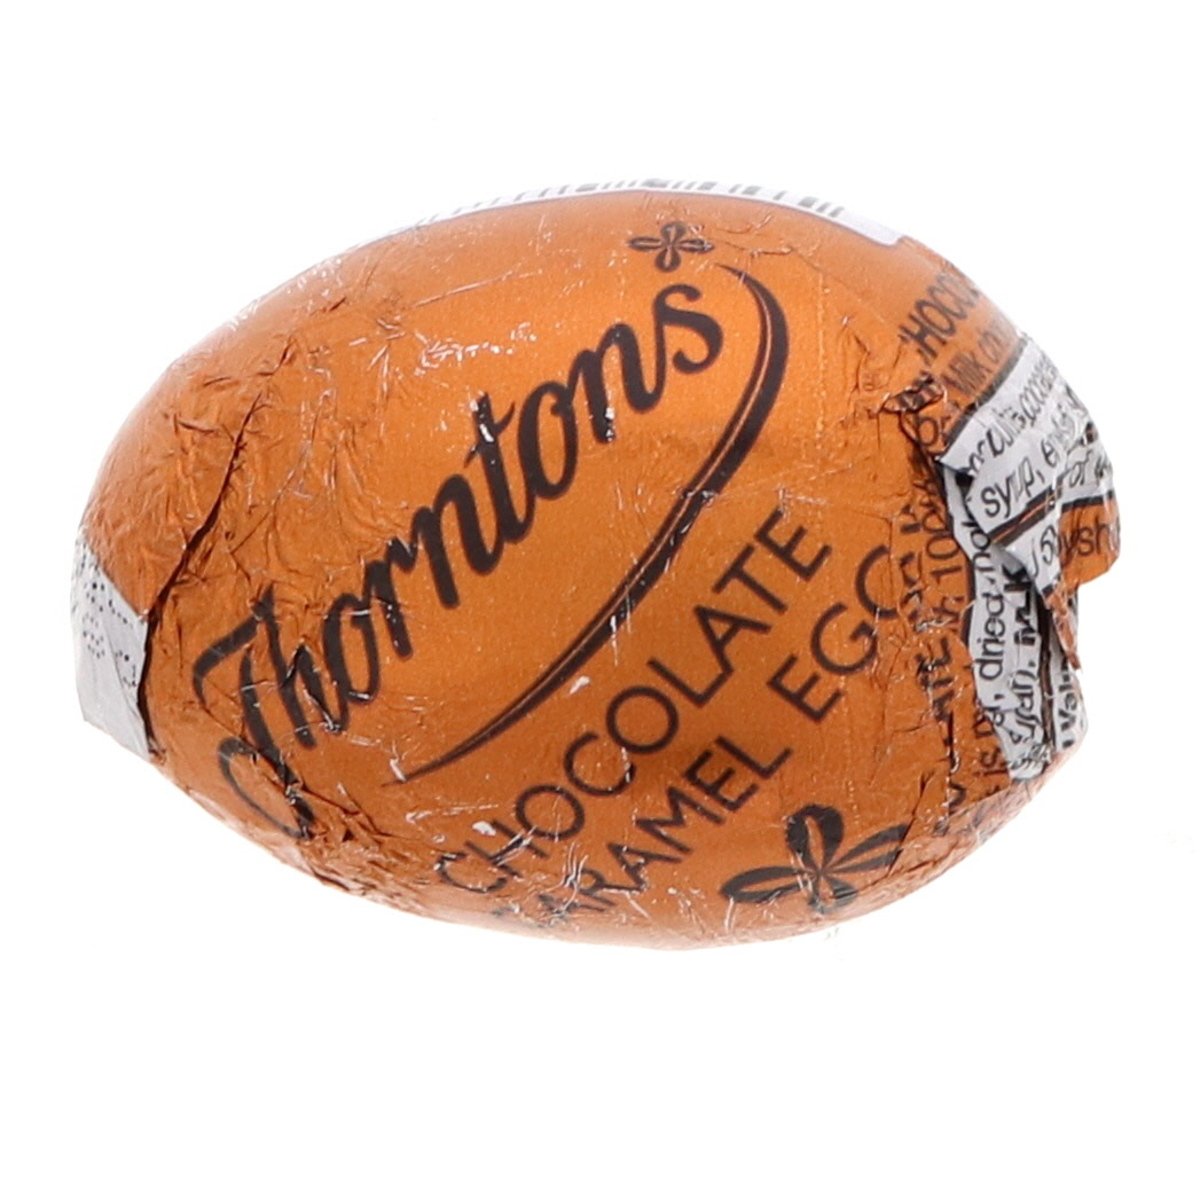 Thorntons Chocolate Caramel Egg 36 g